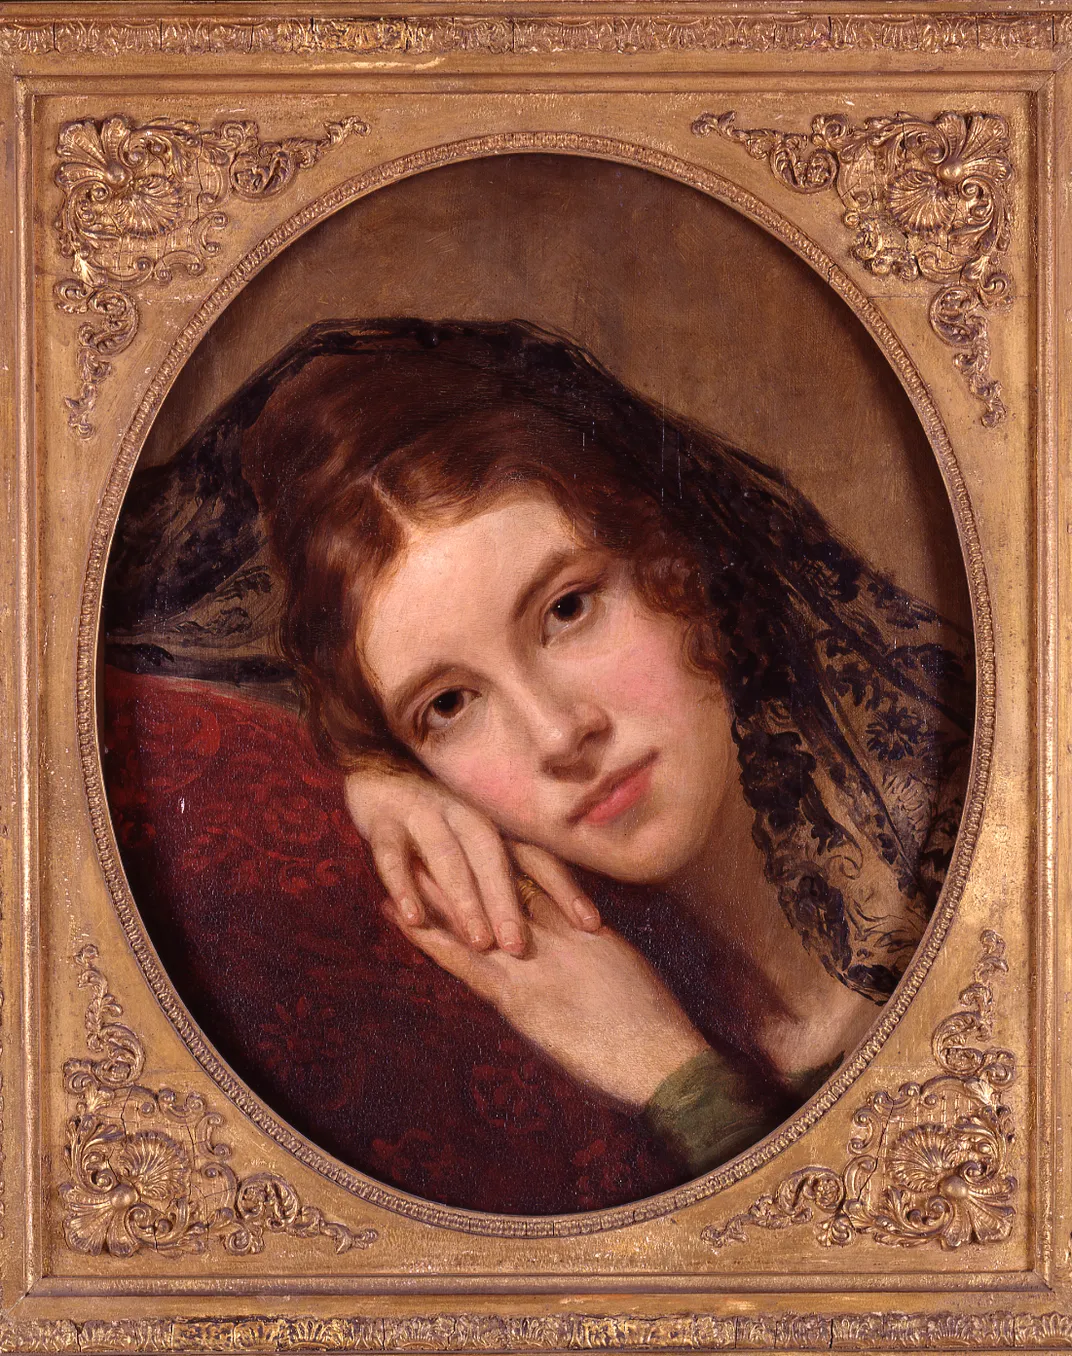 An 1834 portrait of Fanny Longfellow by artist G.P.A. Healy